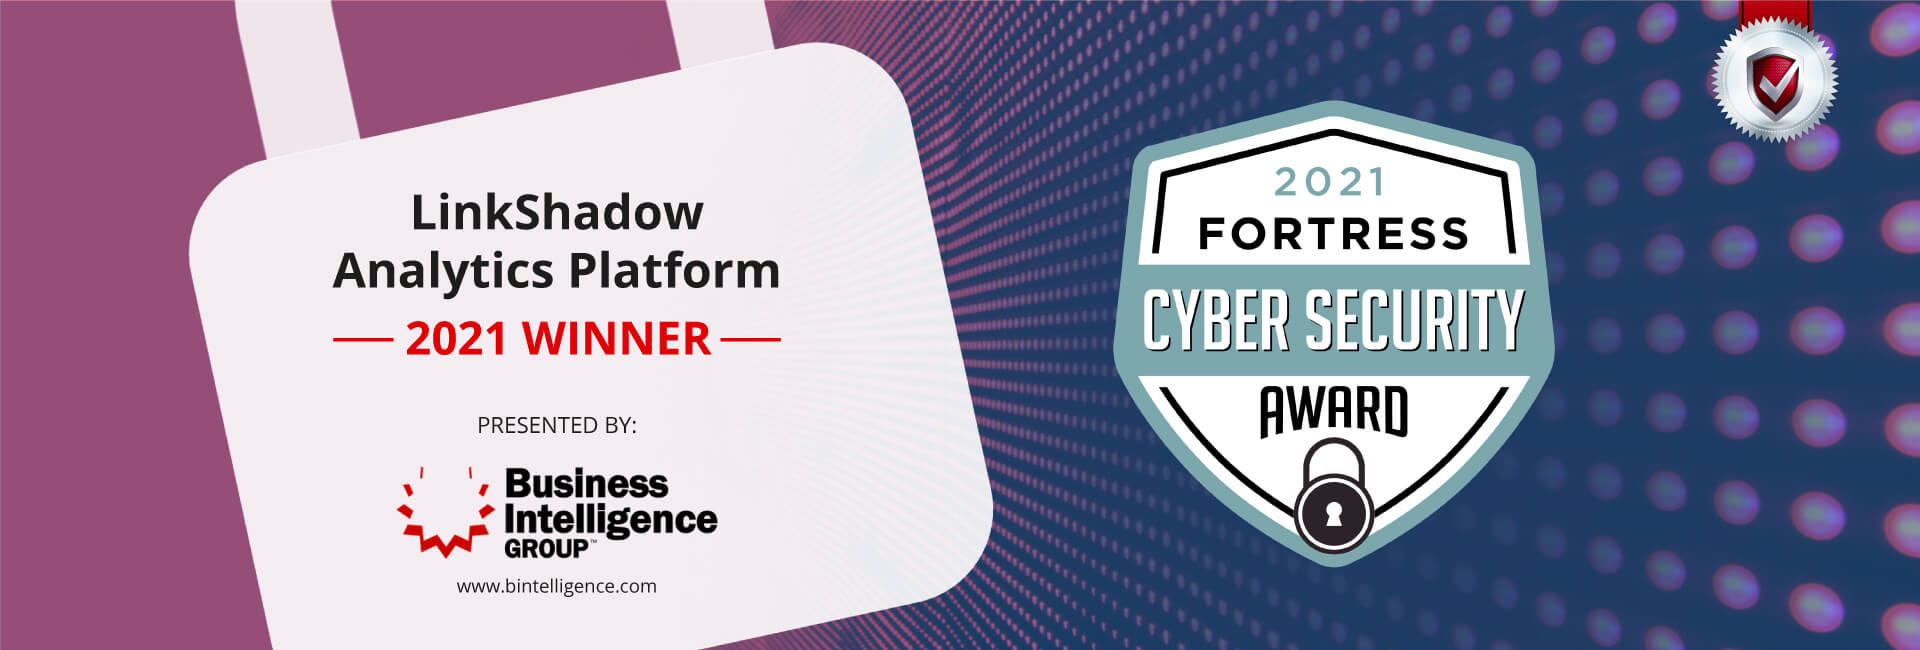 Fortress CyberSecurity Award 2021